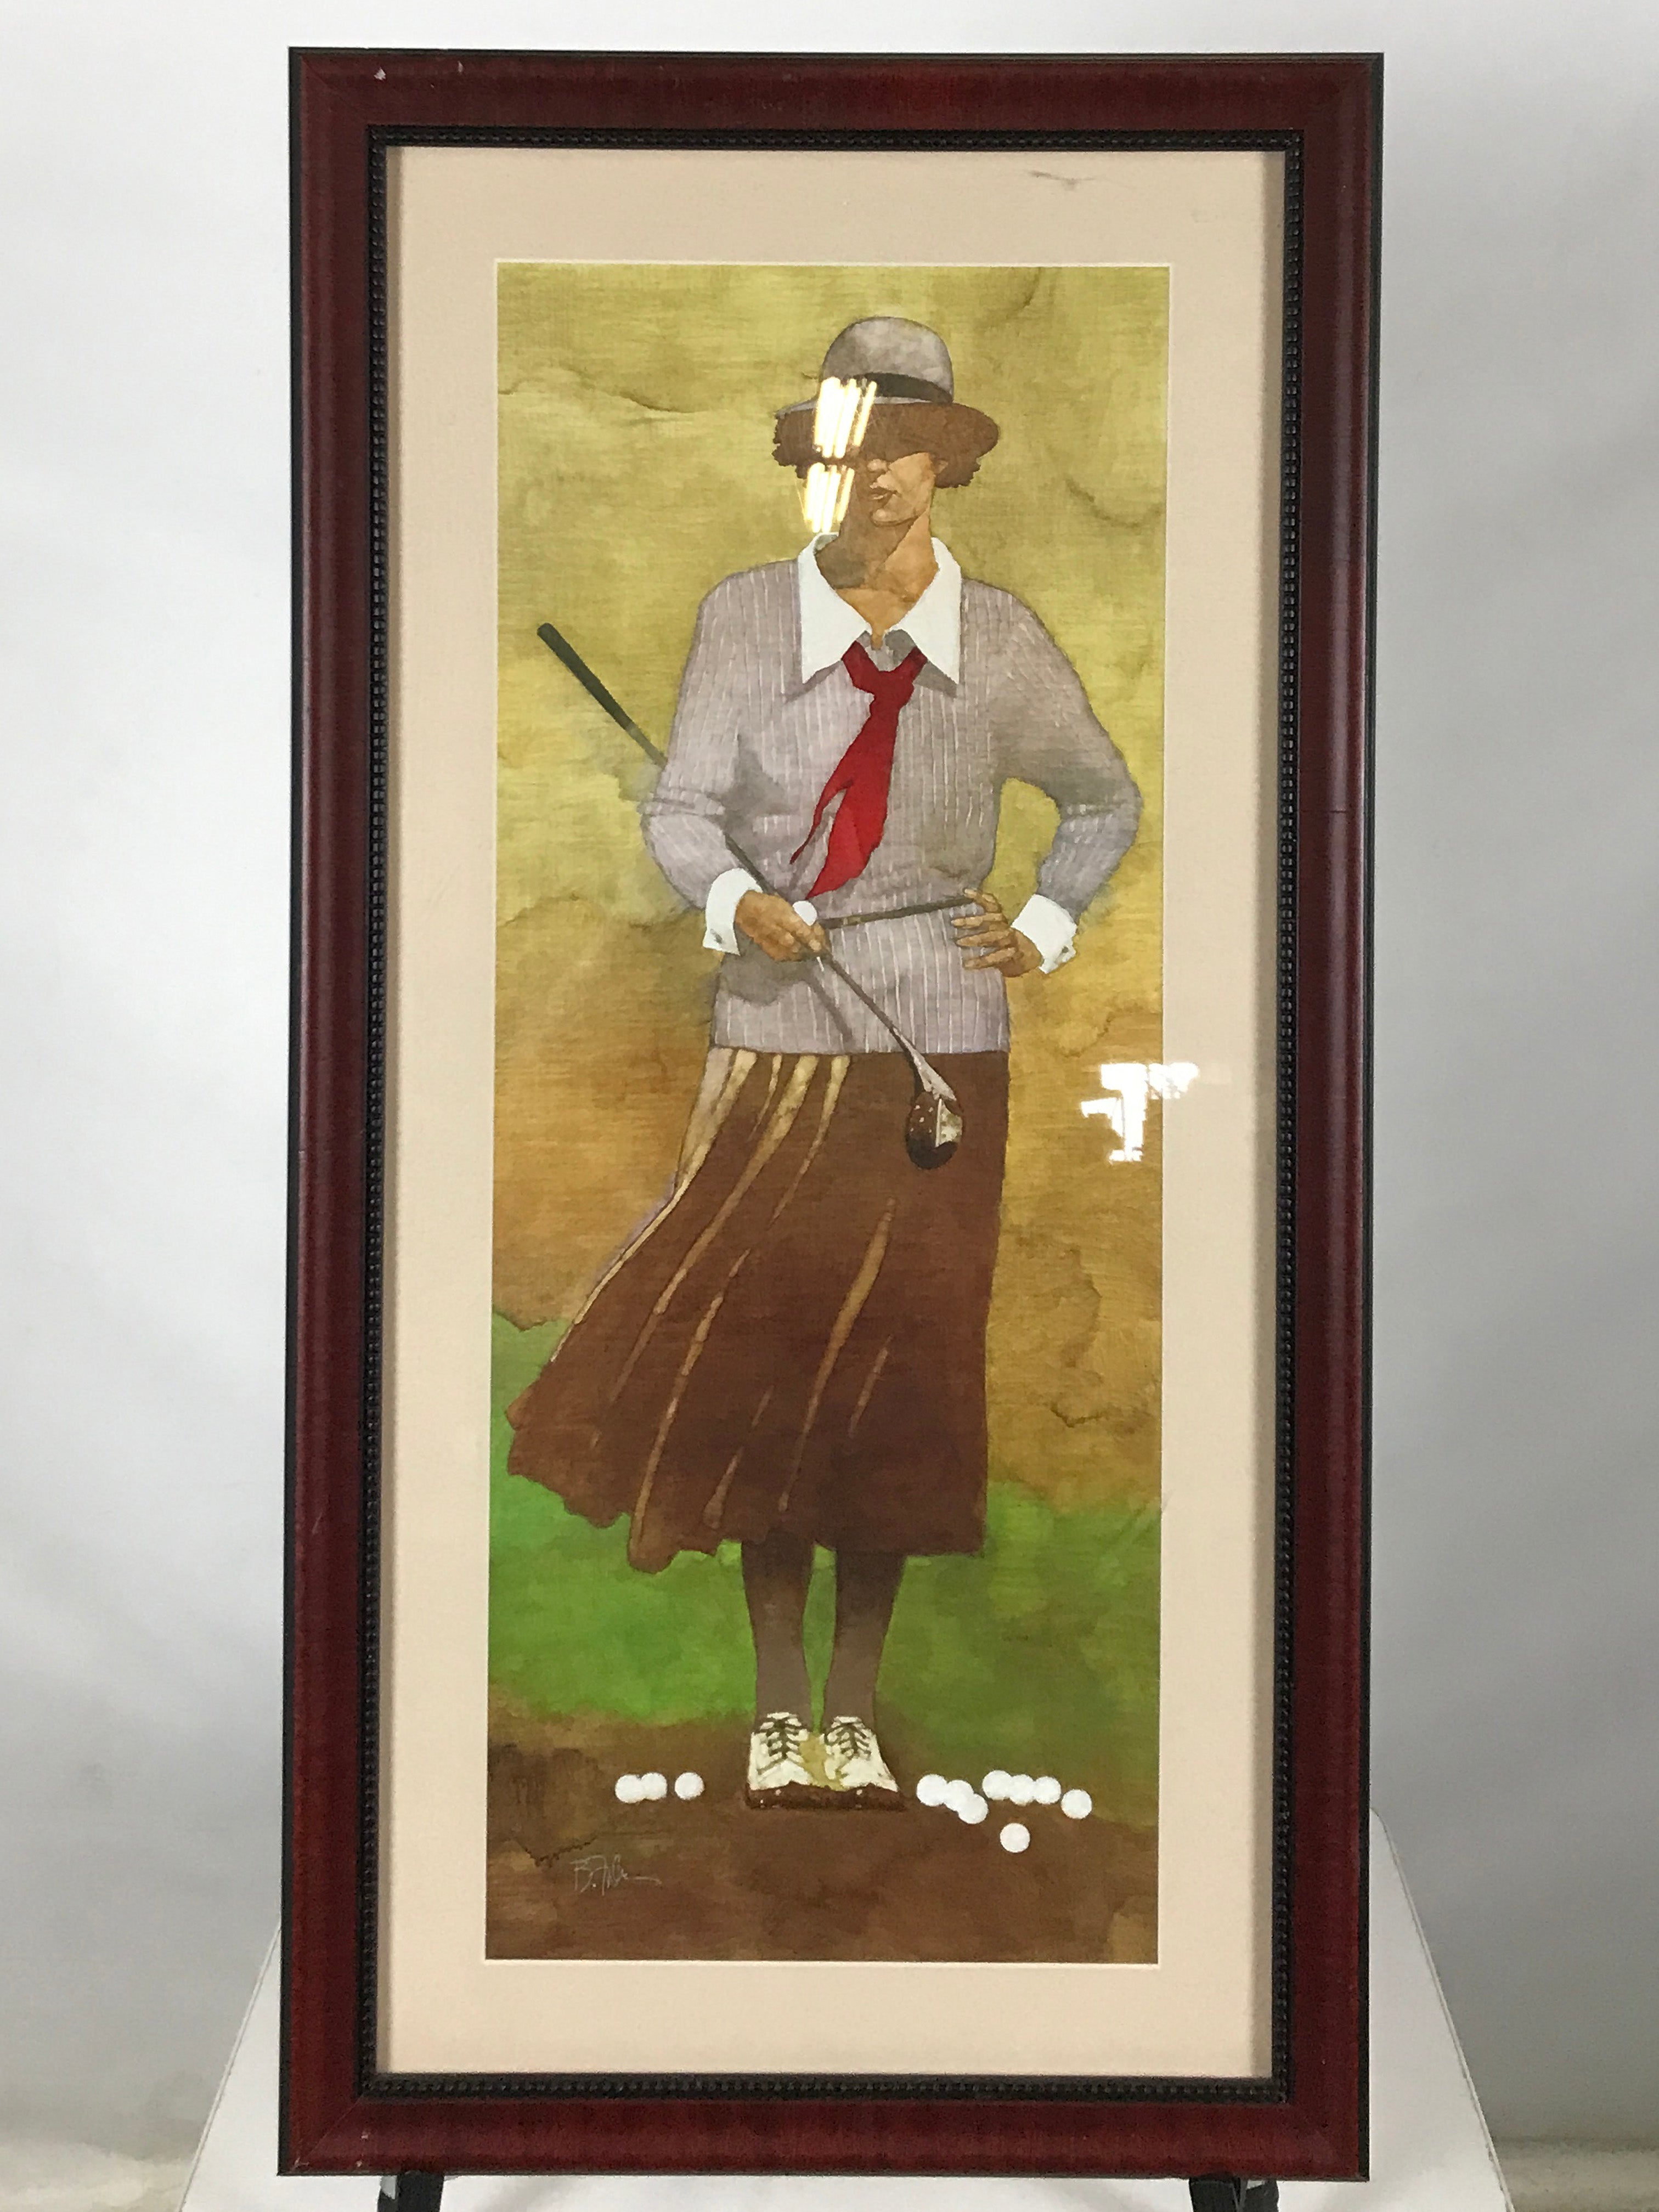 Bart Forbes Framed Art Print "Lady Golfer"